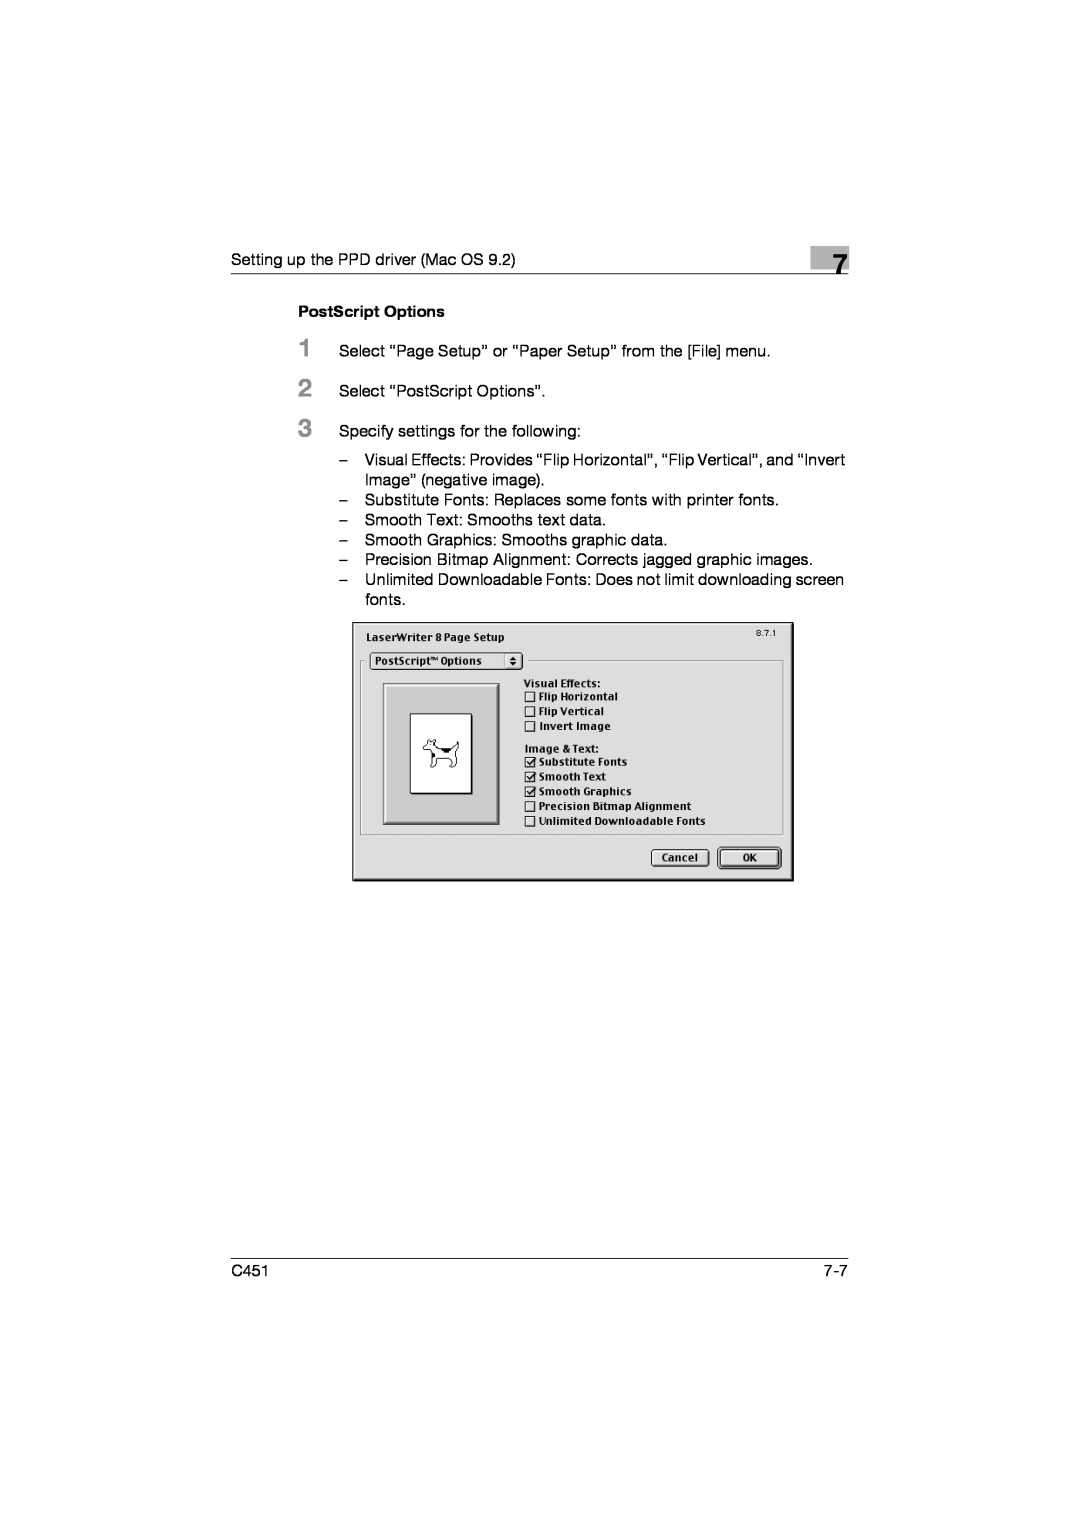 Konica Minolta C451 manual PostScript Options 